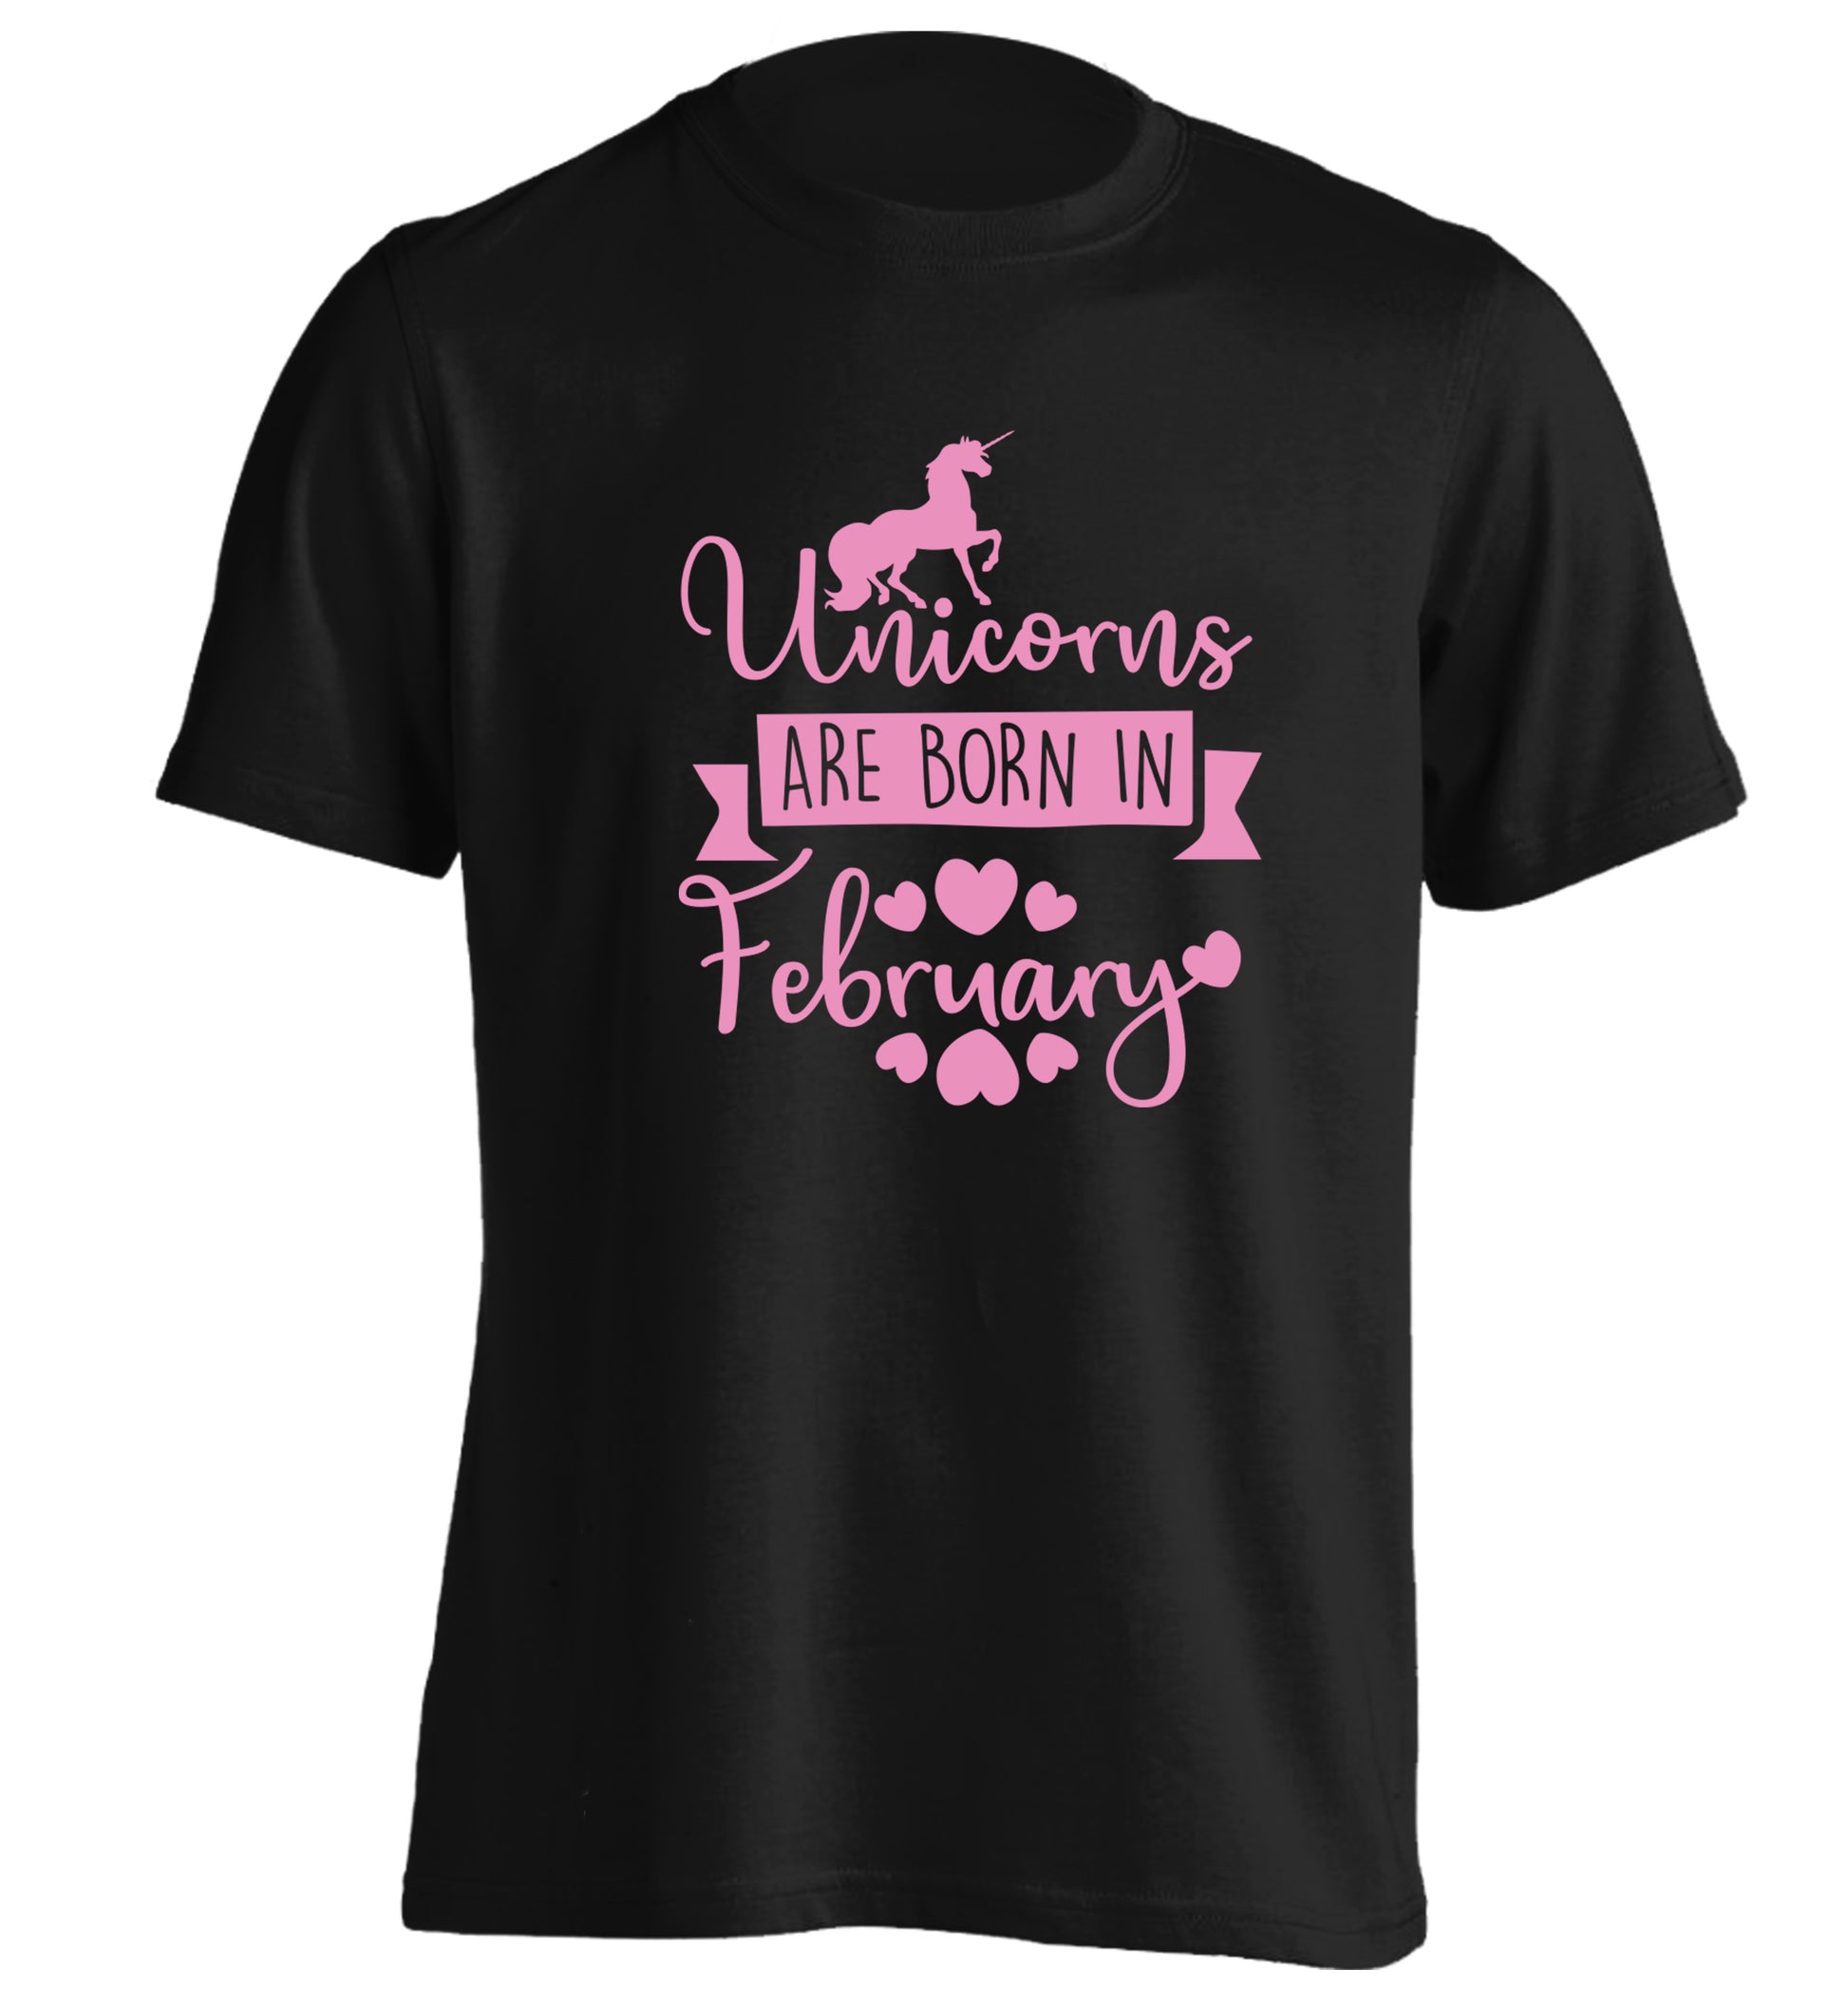 Unicorns are born in February adults unisex black Tshirt 2XL